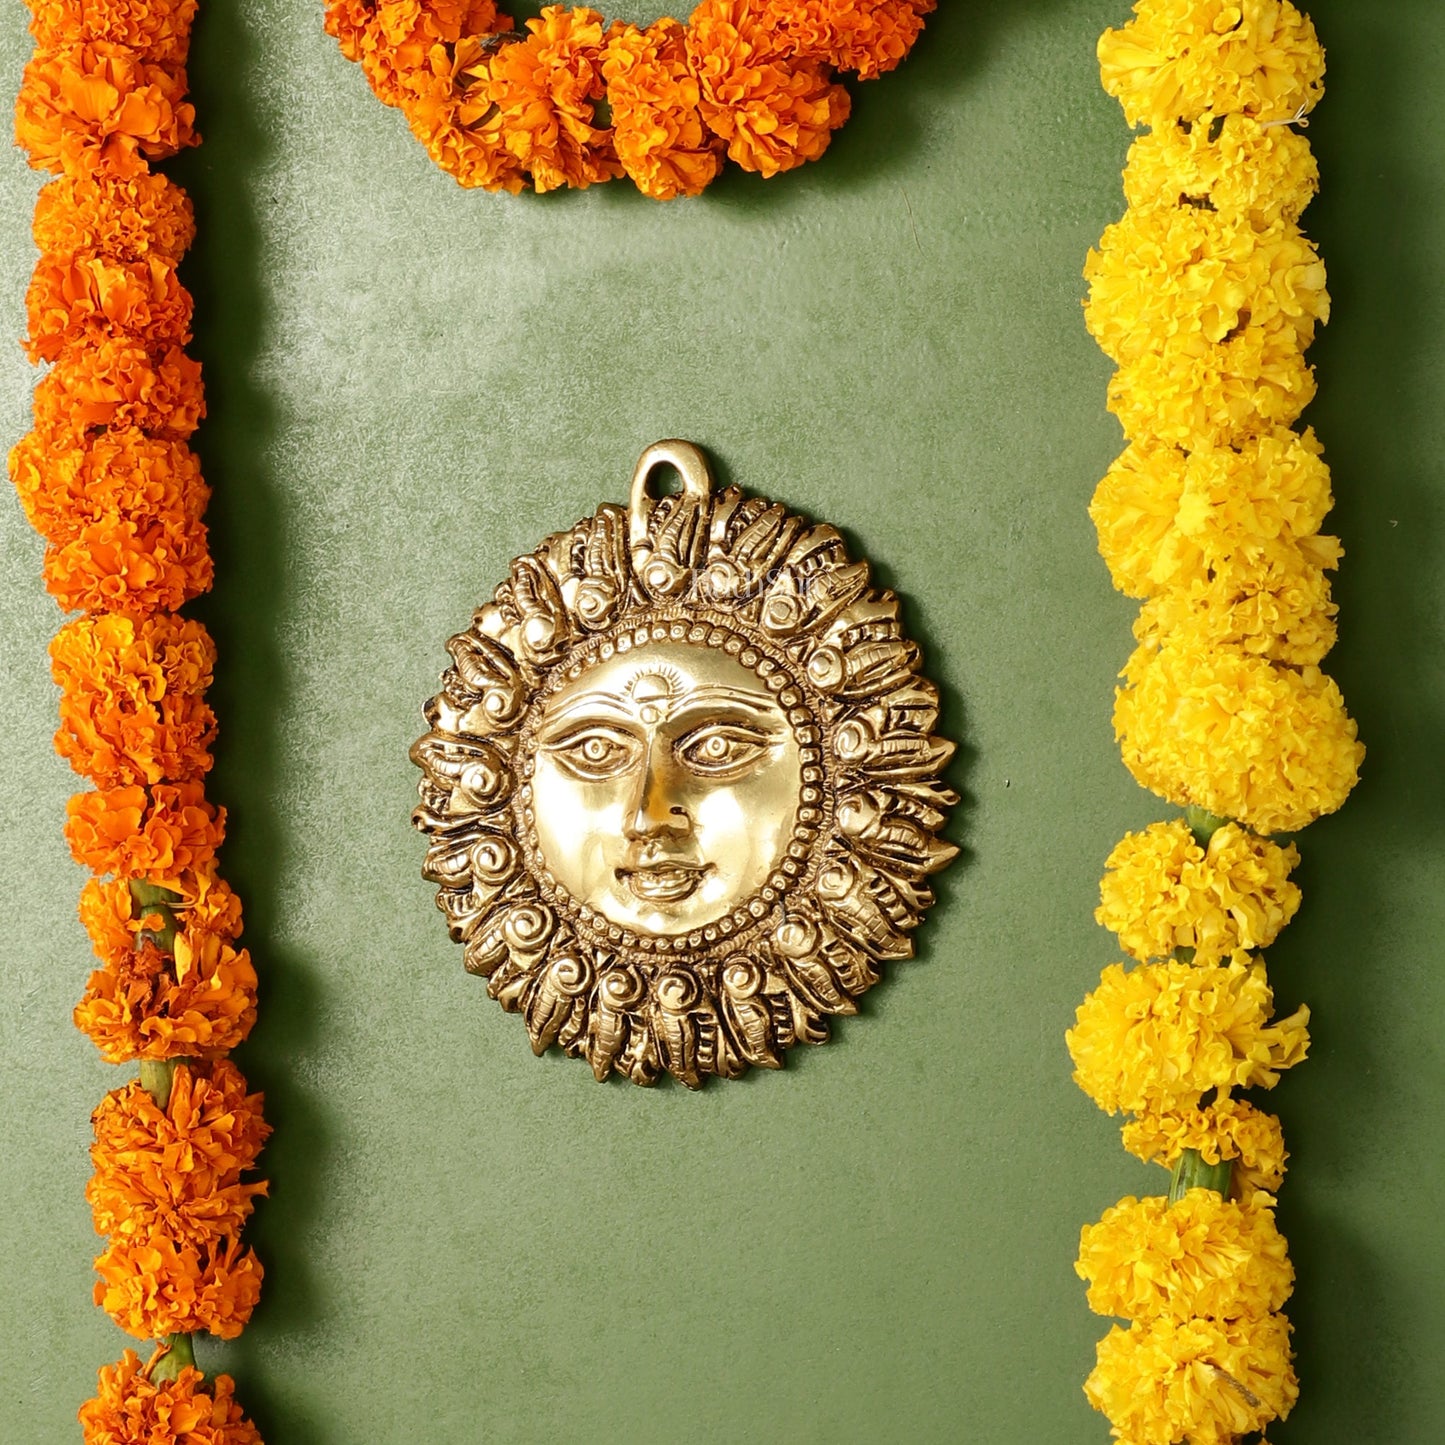 Brass Surya Dev Sun God Wall Hanging - 5 x 5 inch - Budhshiv.com